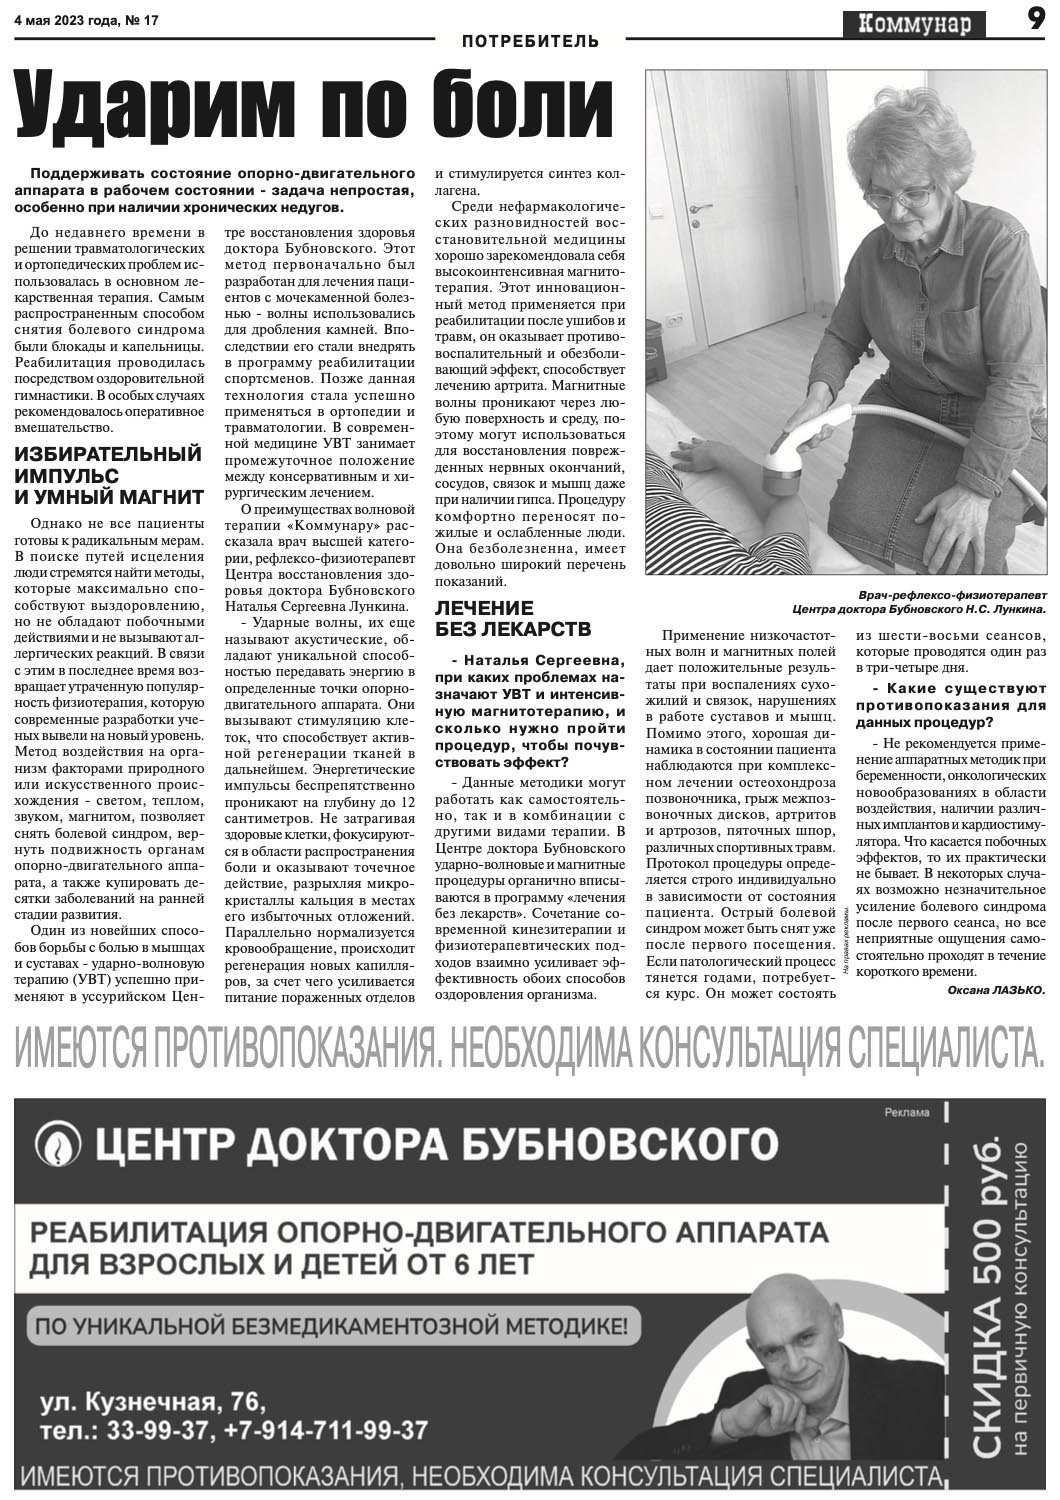 Публикация в газете "Коммунар" от 4 мая 2023 года.jpg